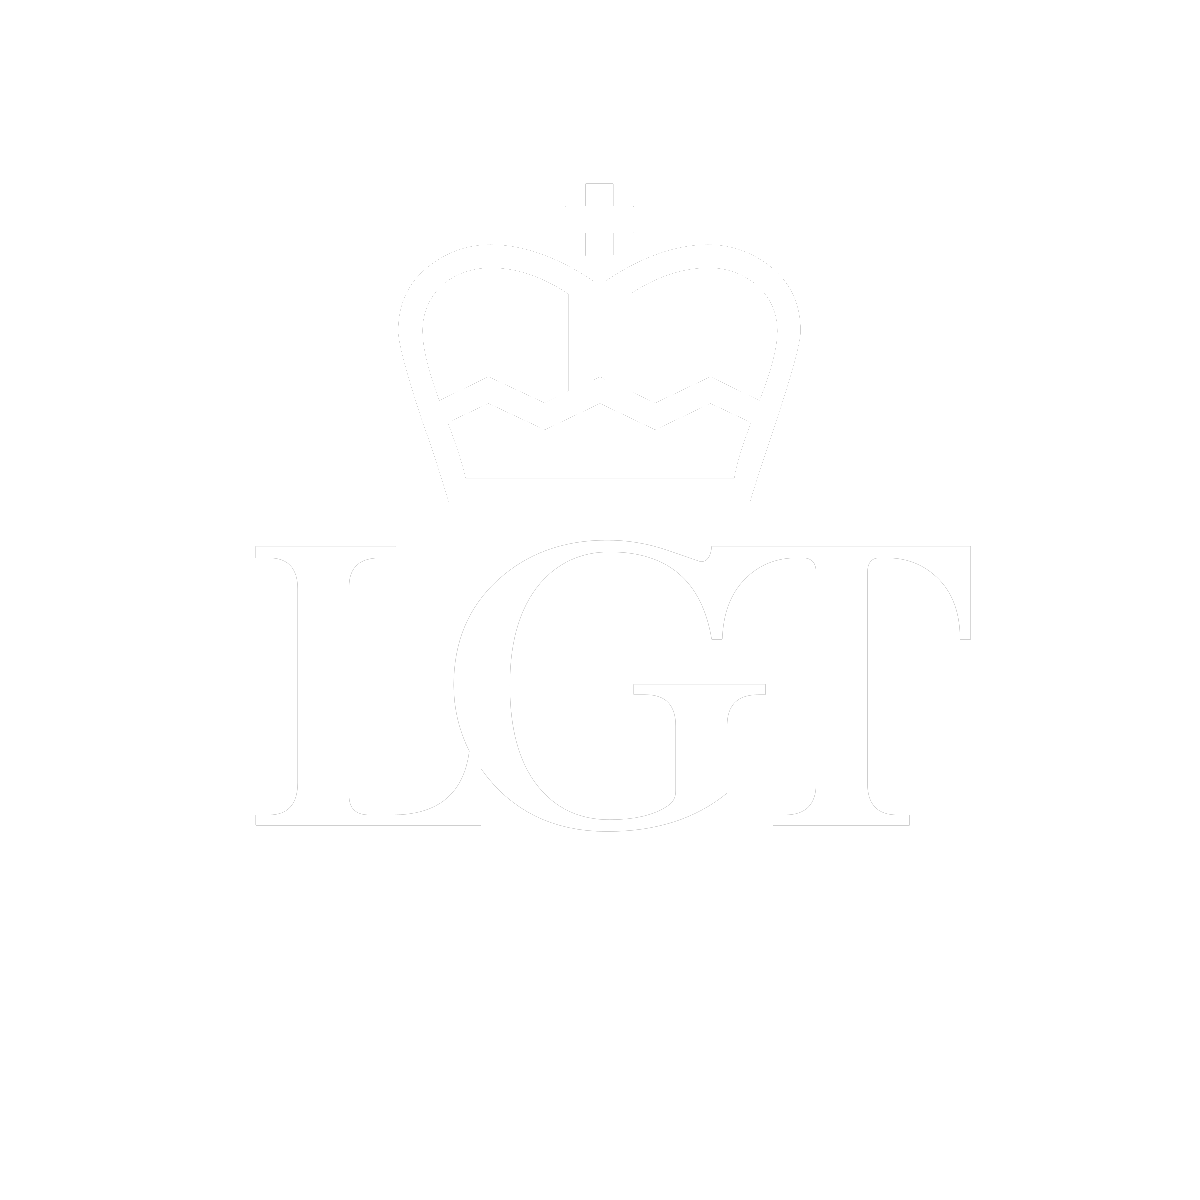 LGT Group